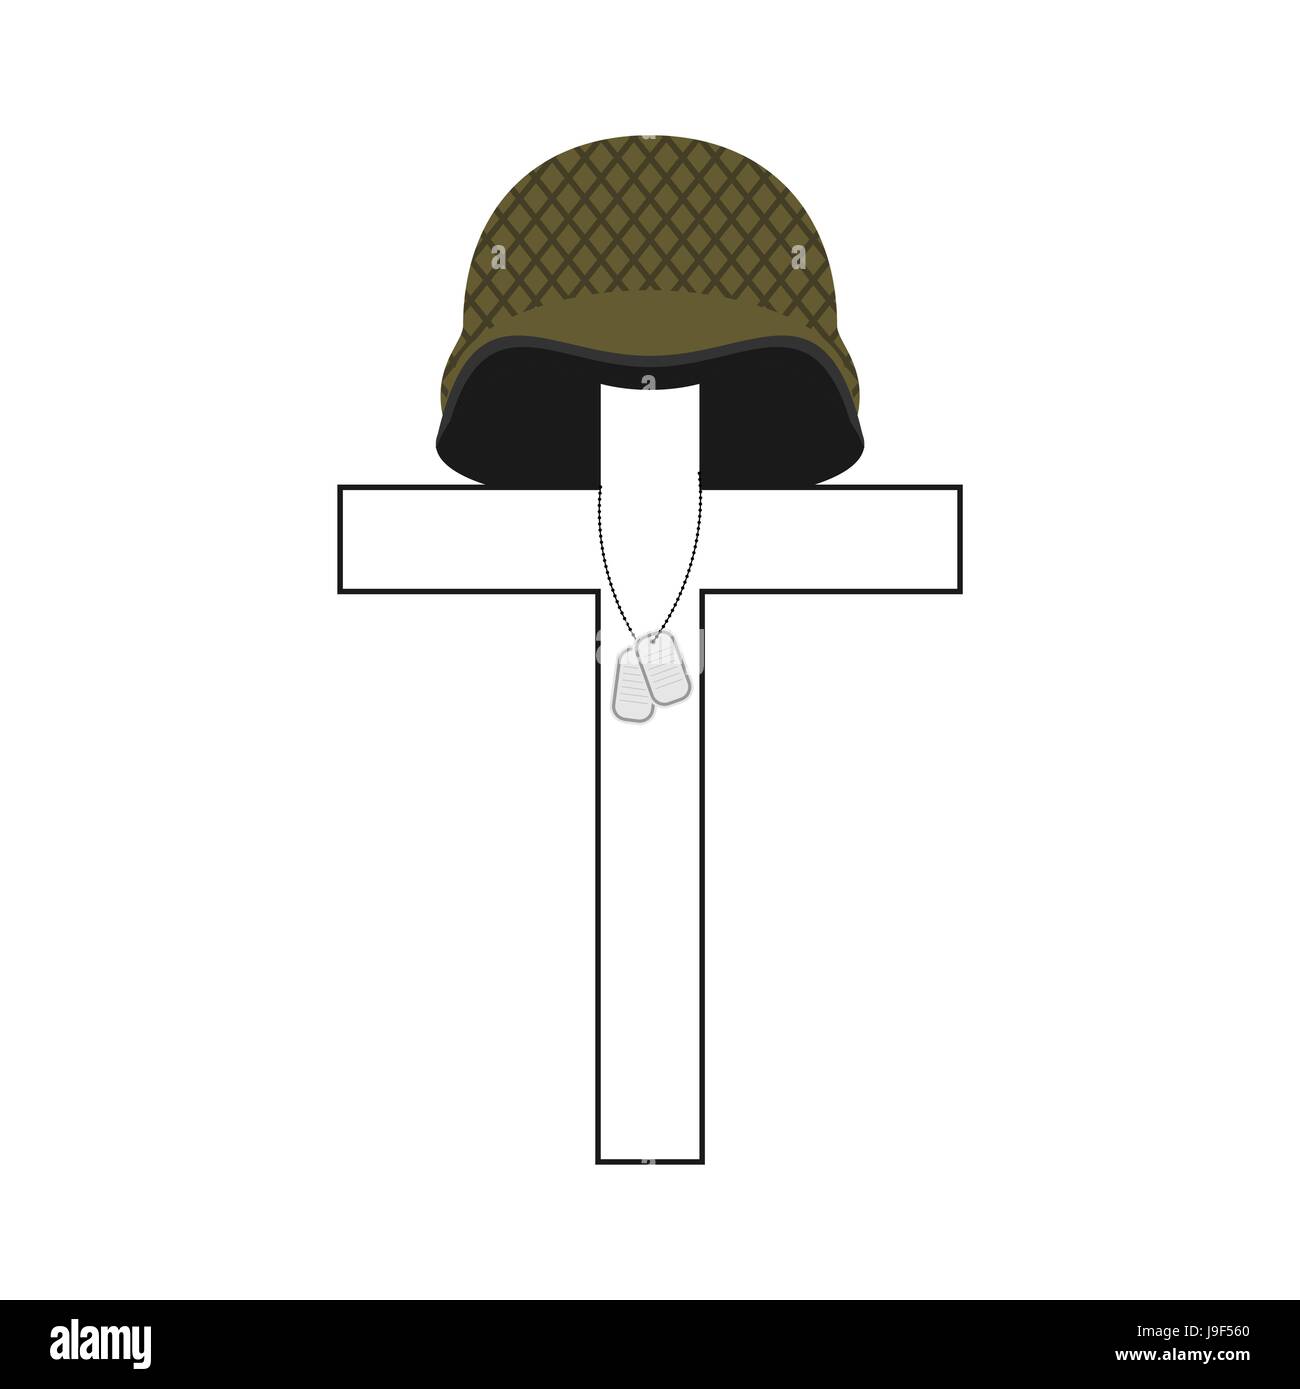 Grave of soldier. Cross and military helmet. Soldier badge. Patriotic memorial illustration Stock Vector